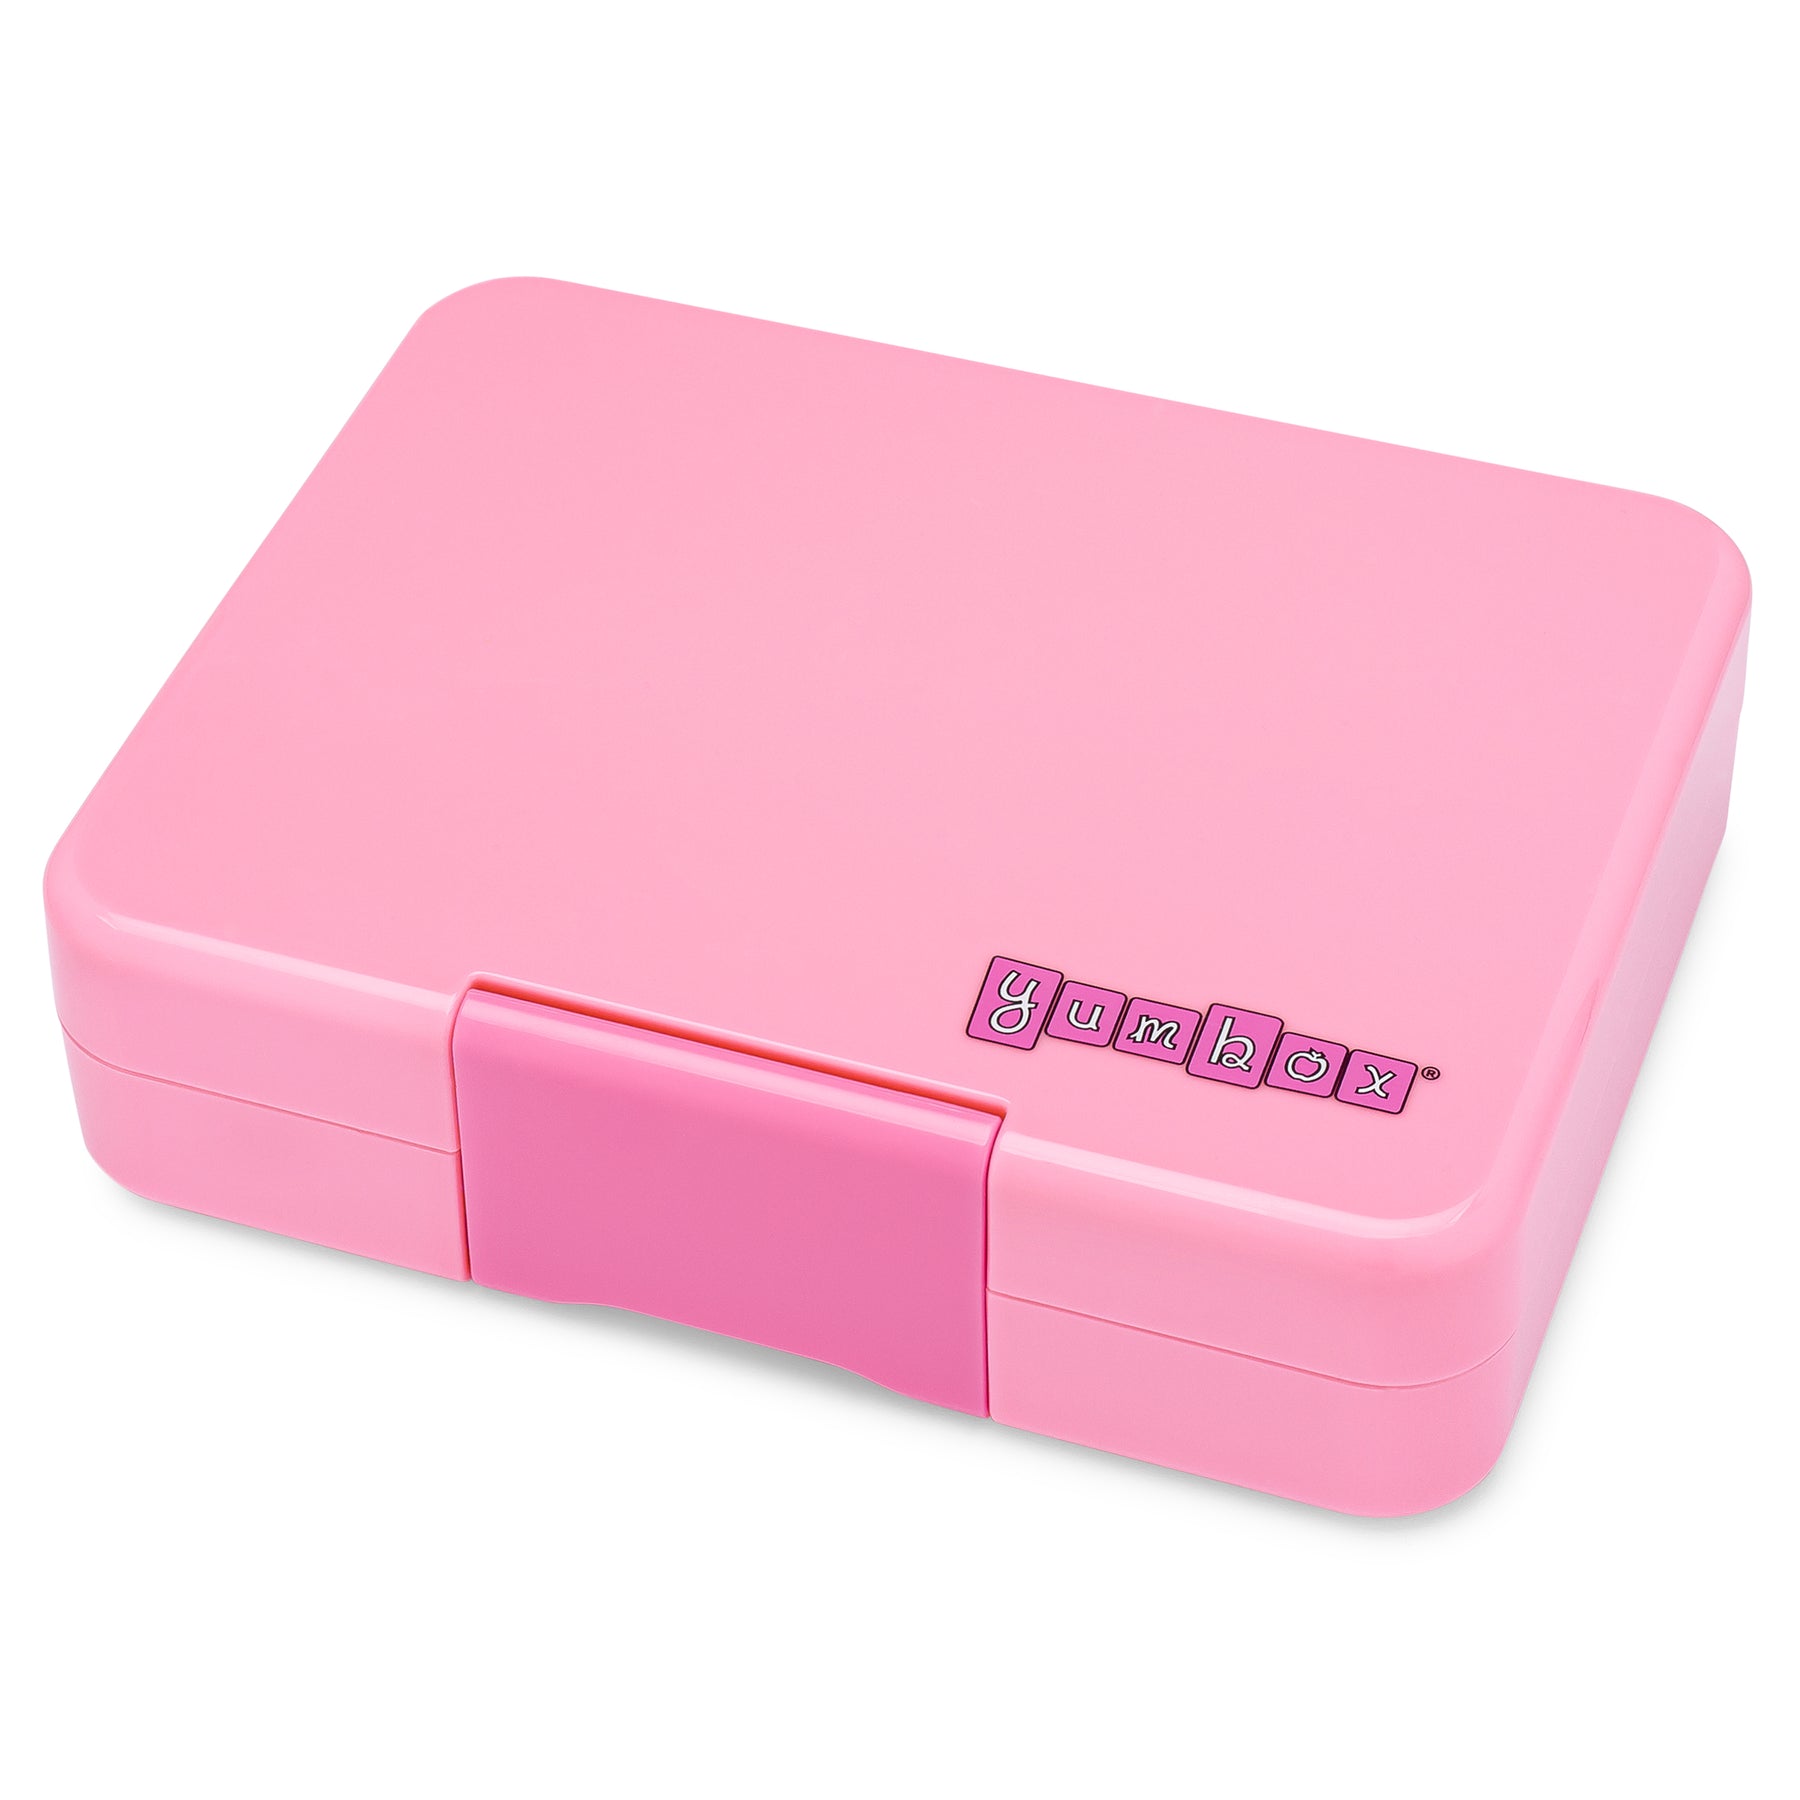 Yumbox Snack Box - Fifi Pink